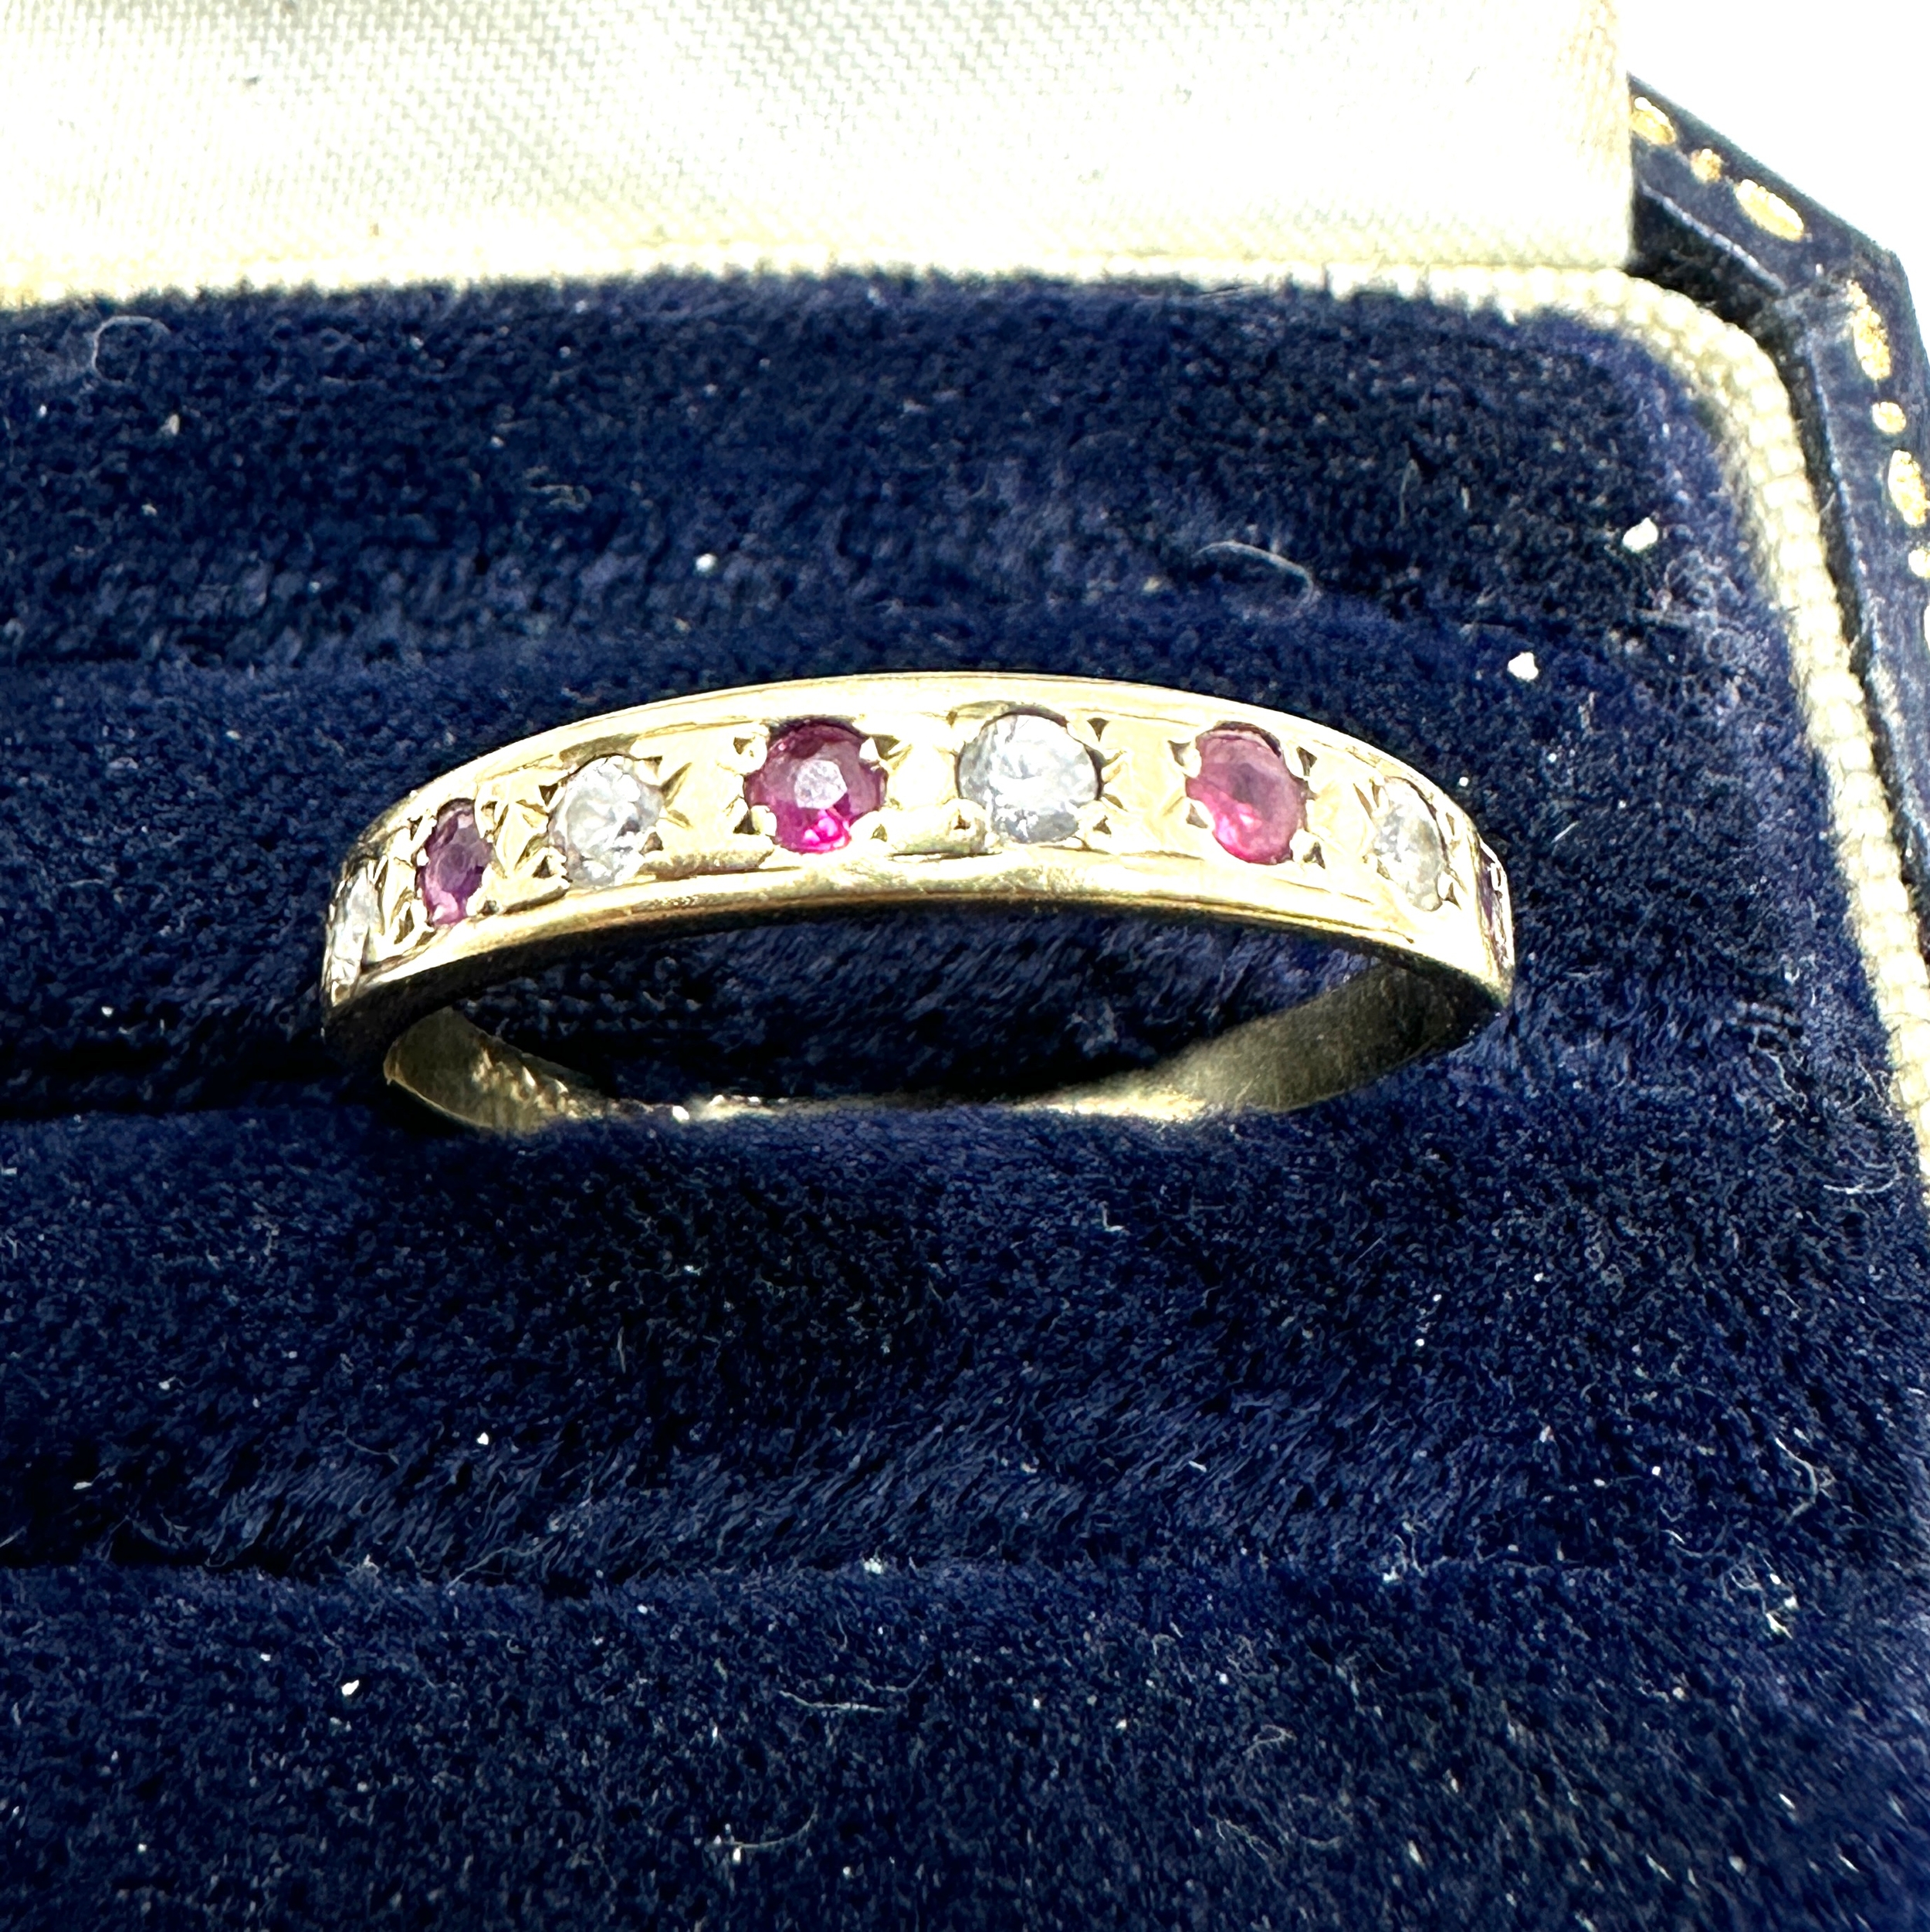 9ct gold ruby & white gemstone ring weight 1.5g